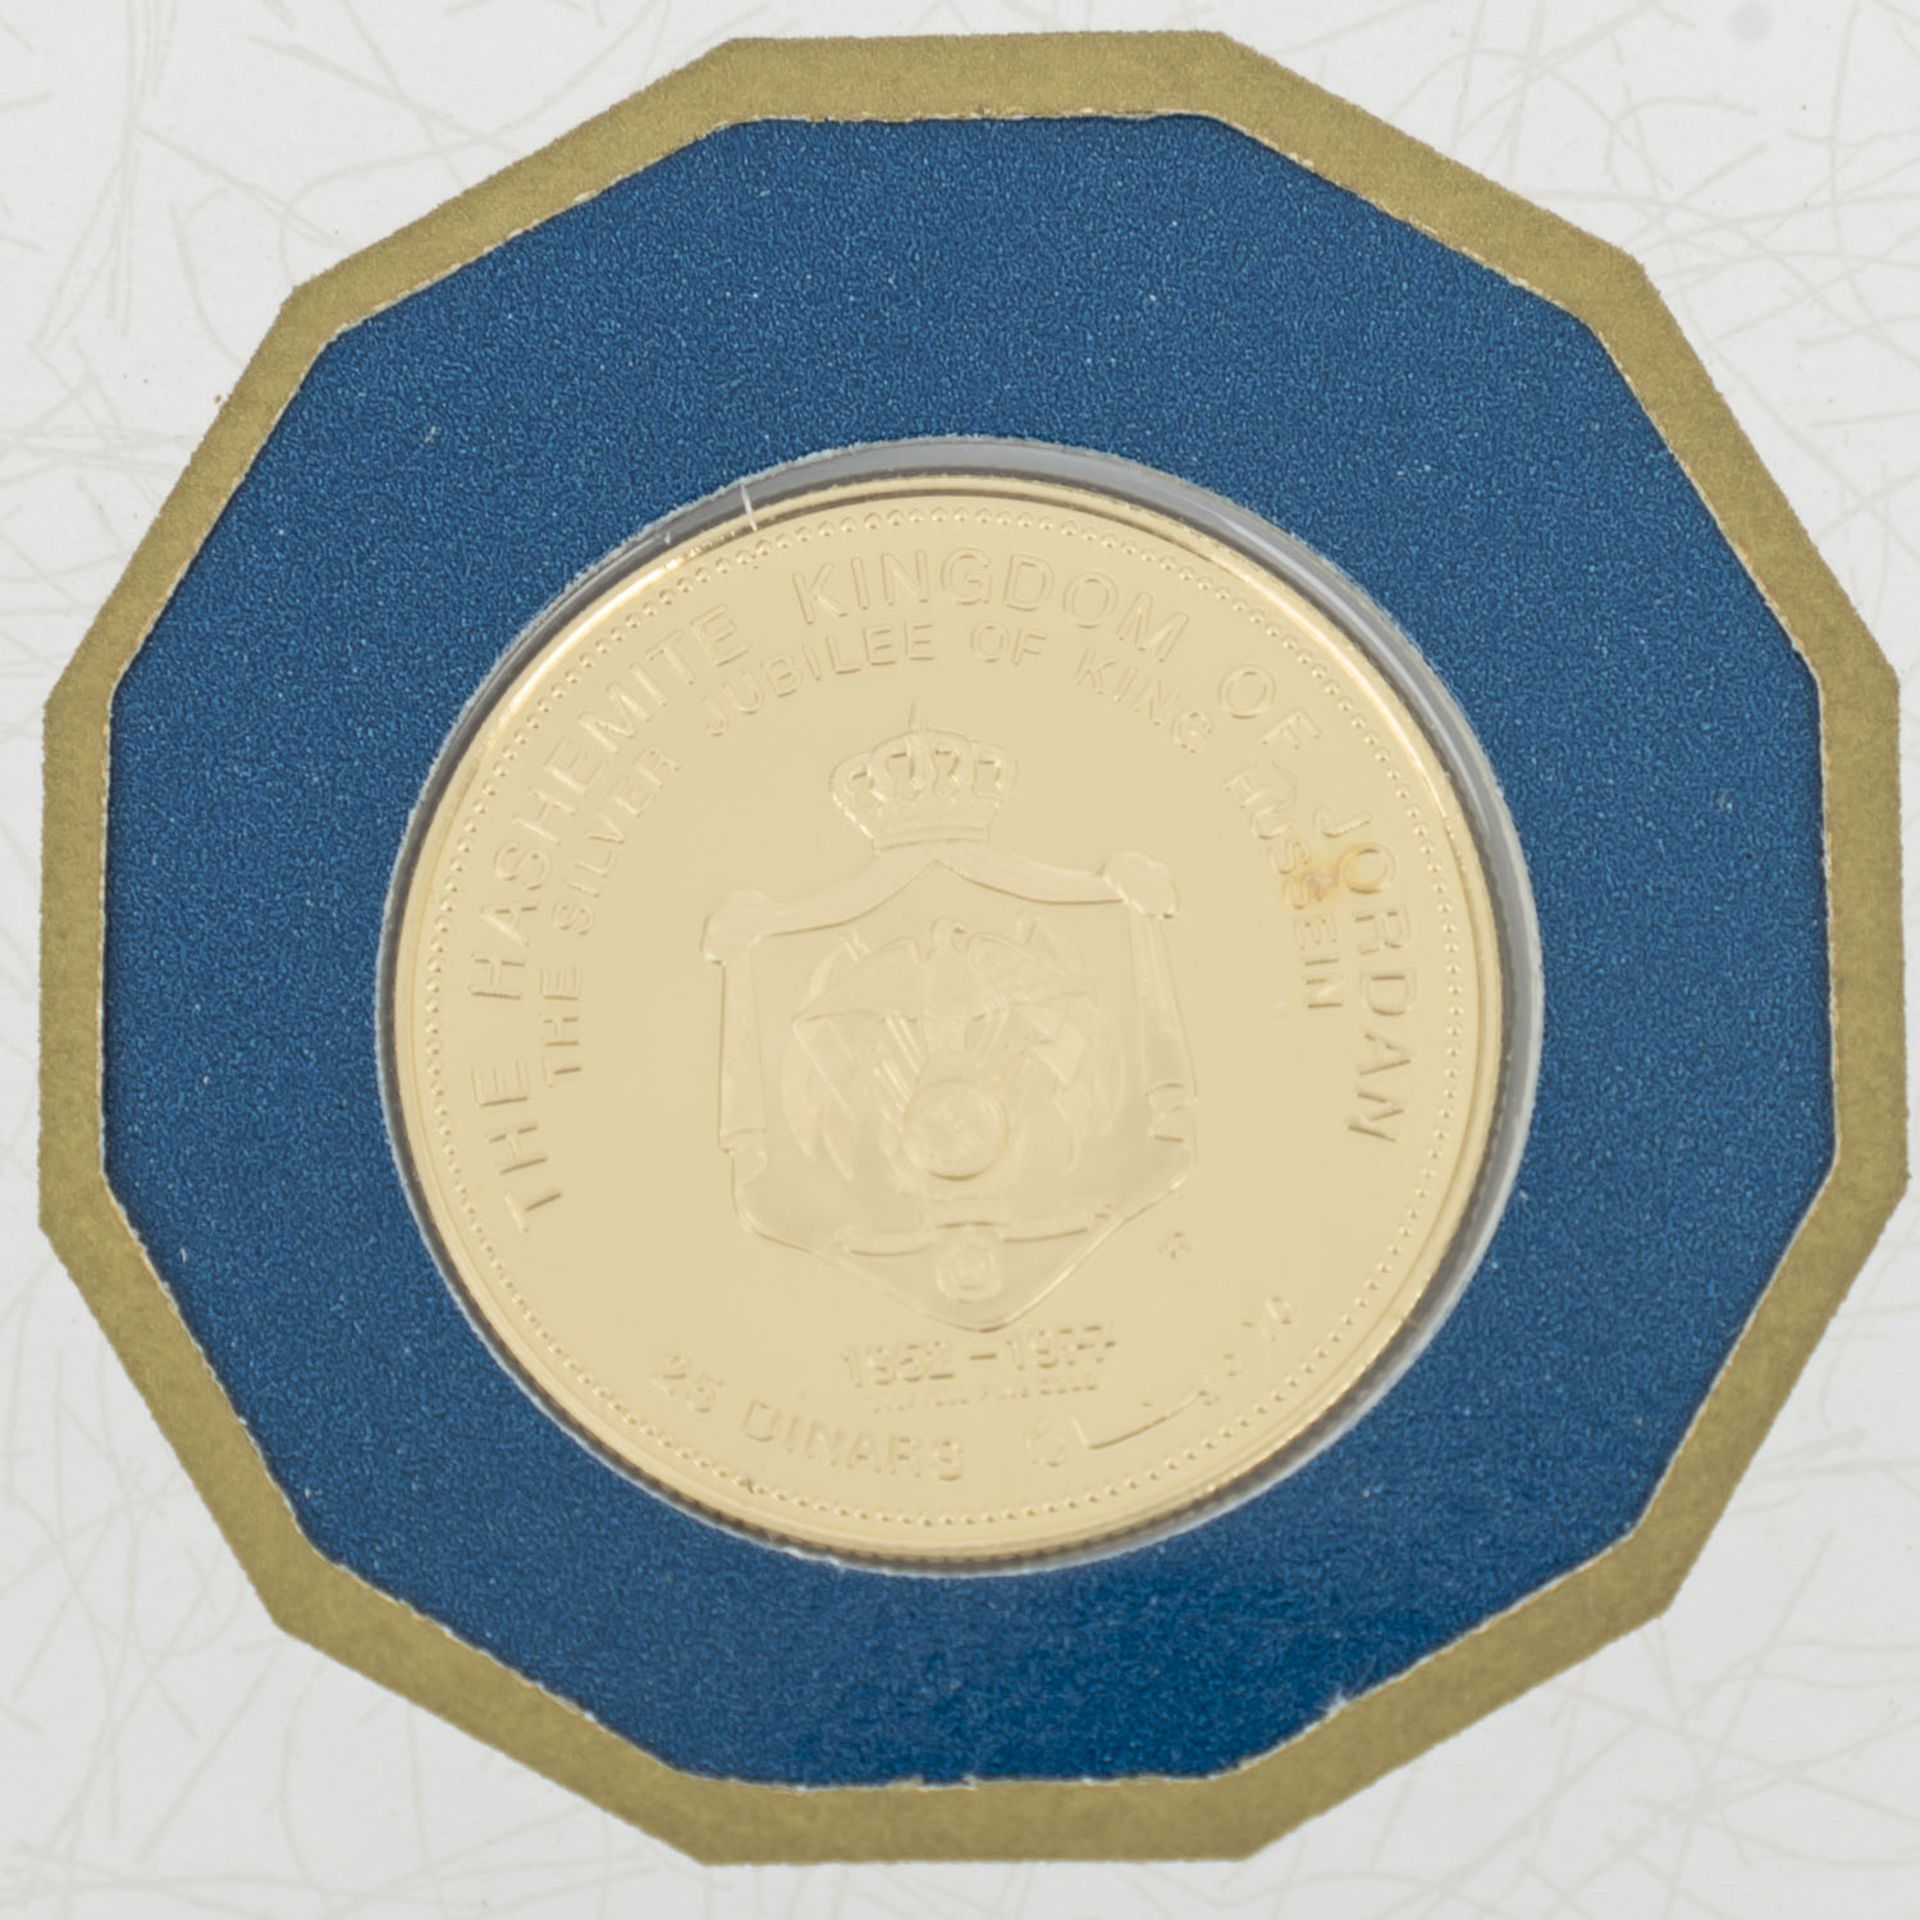 Jordanien - 25 Dinars 1977, GOLD, ca. 13,7 Gramm fein, proof, selten! | Jorda - Bild 3 aus 3